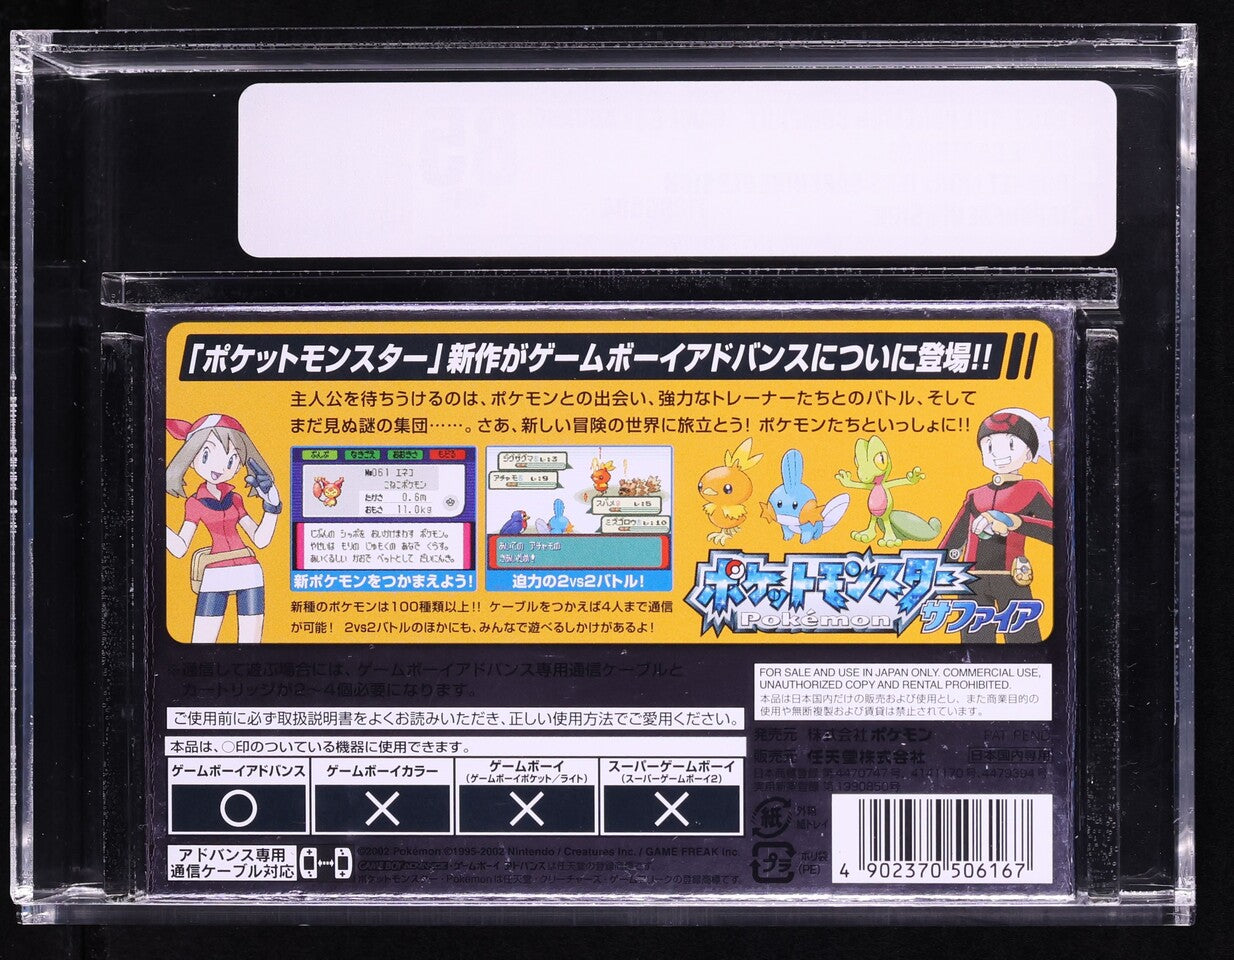 2002 POKEMON SAPPHIRE JAPANESE NINTENDO GAME BOY ADVANCE GBA VGA 85 FACTORY UNOPENED